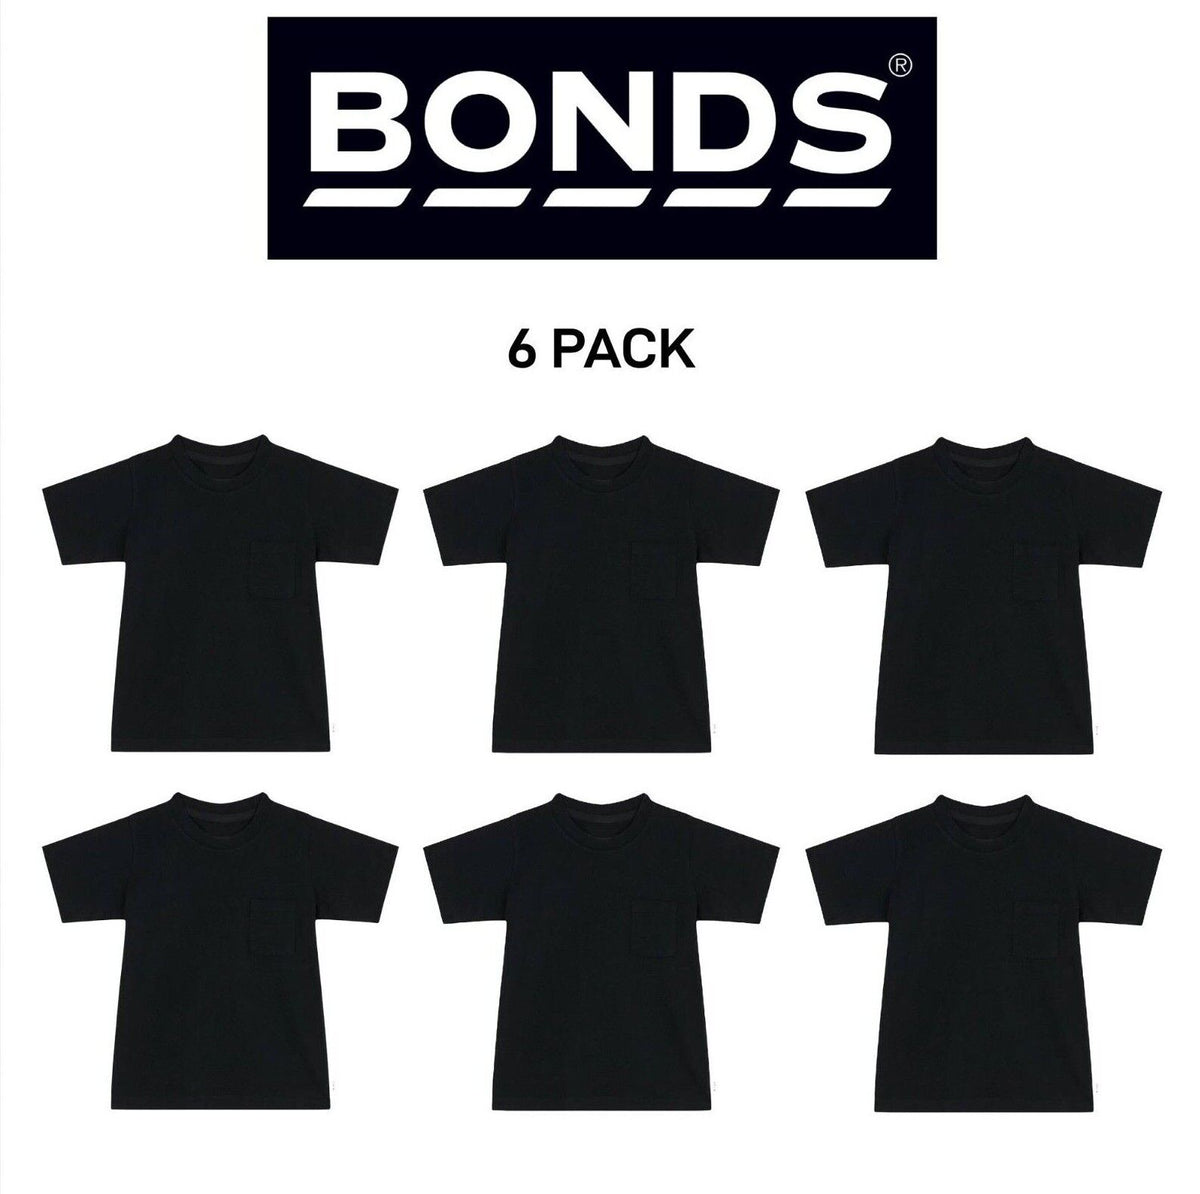 Bonds Kids Next Gen Crew Tee Cotton Shirt Perfect Comfort and Style 6 Pack KVRHK